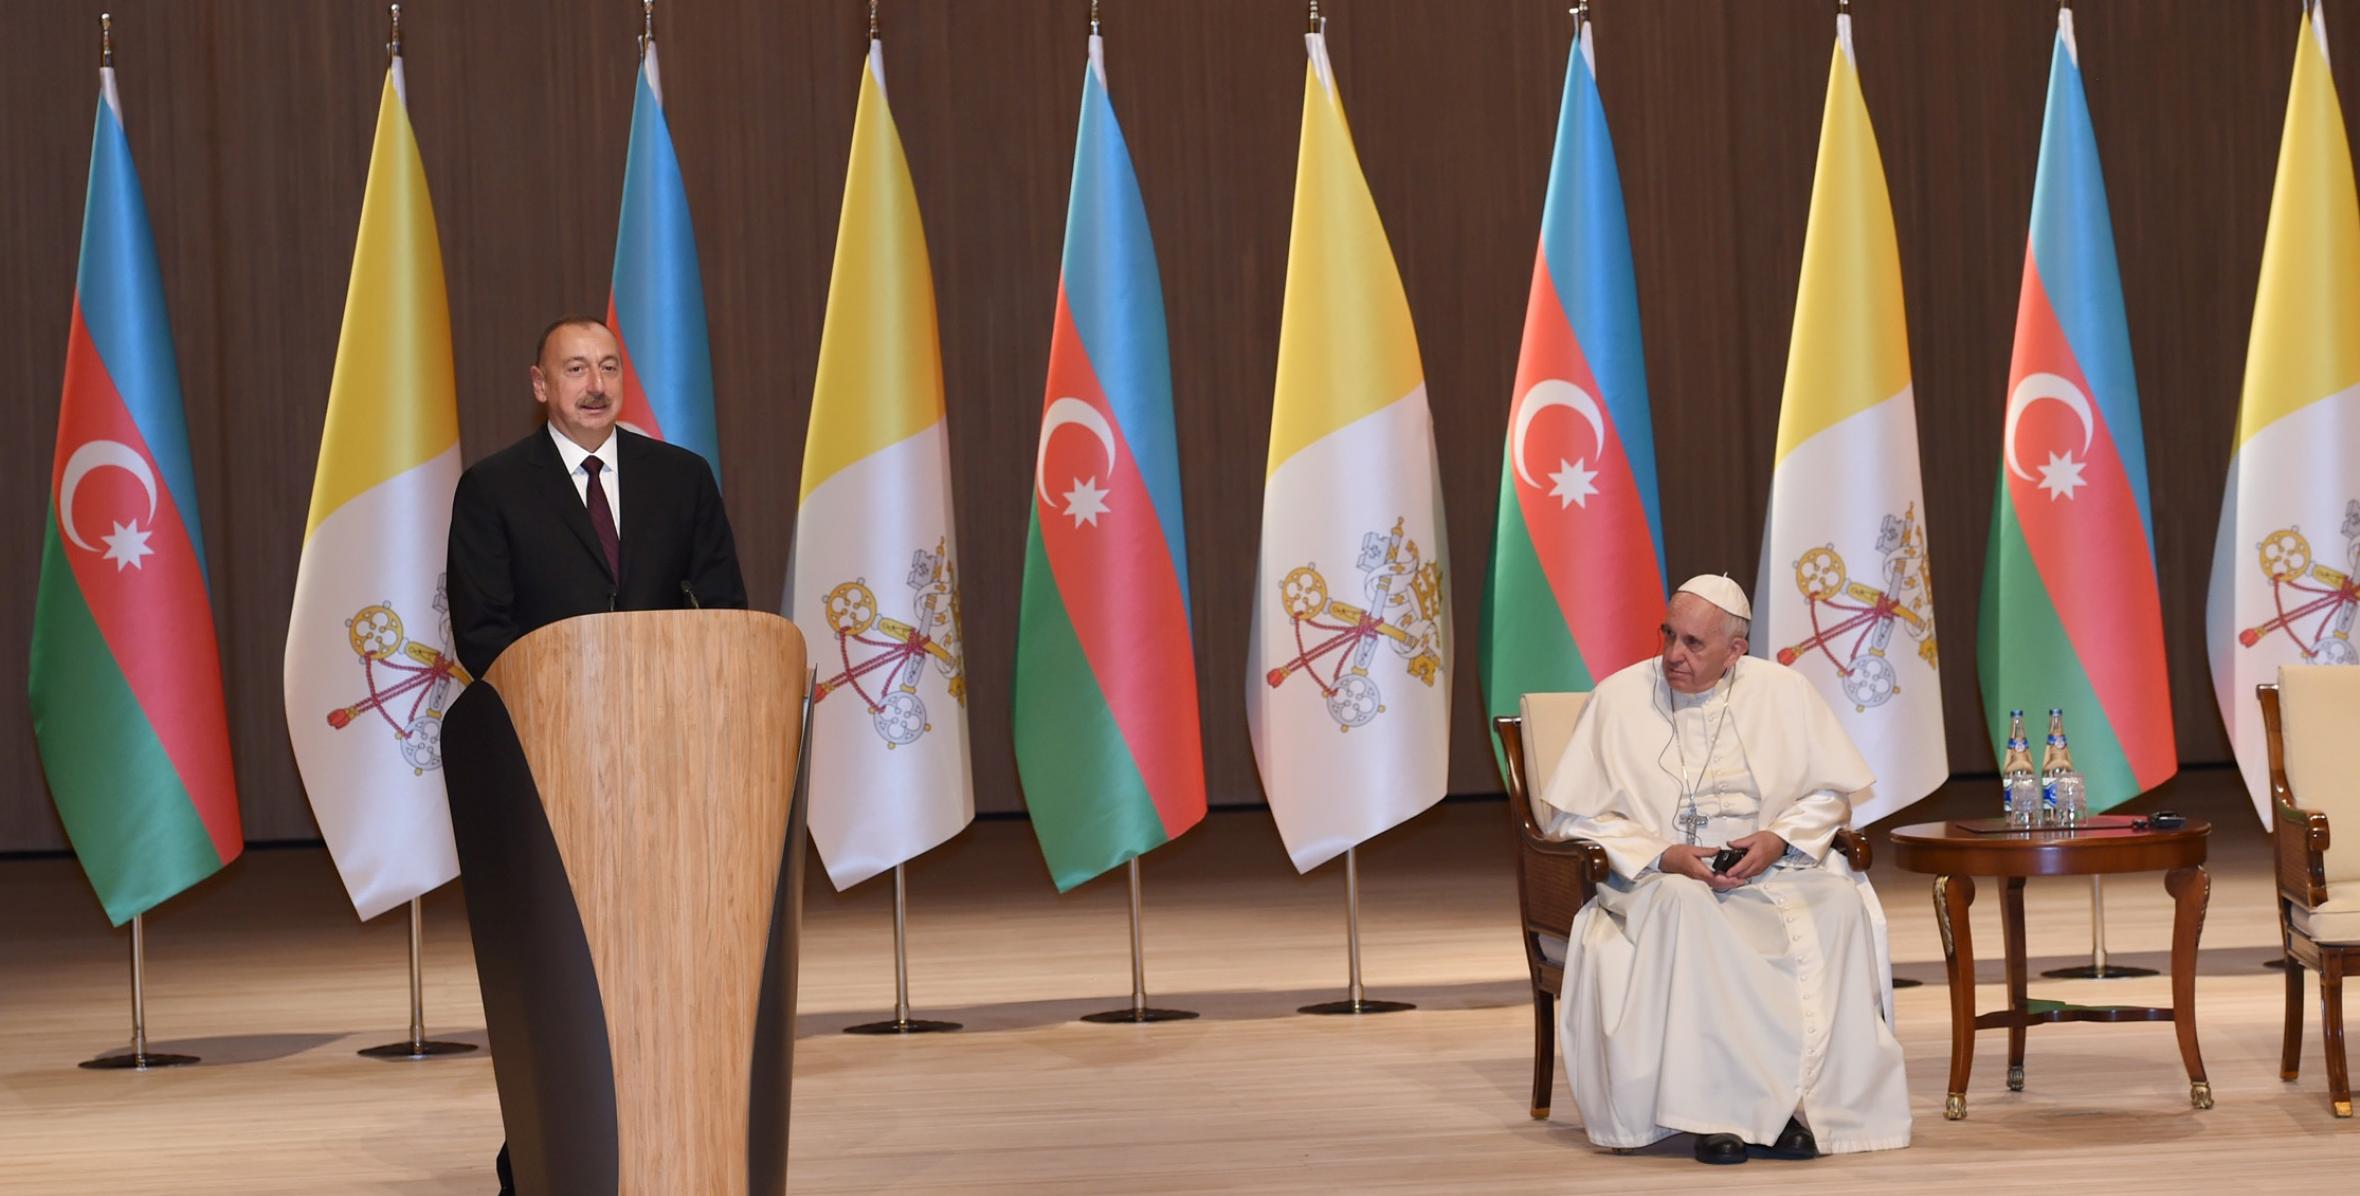 Ilham Aliyev and Pope Francis addressed representatives of general public at Heydar Aliyev Center